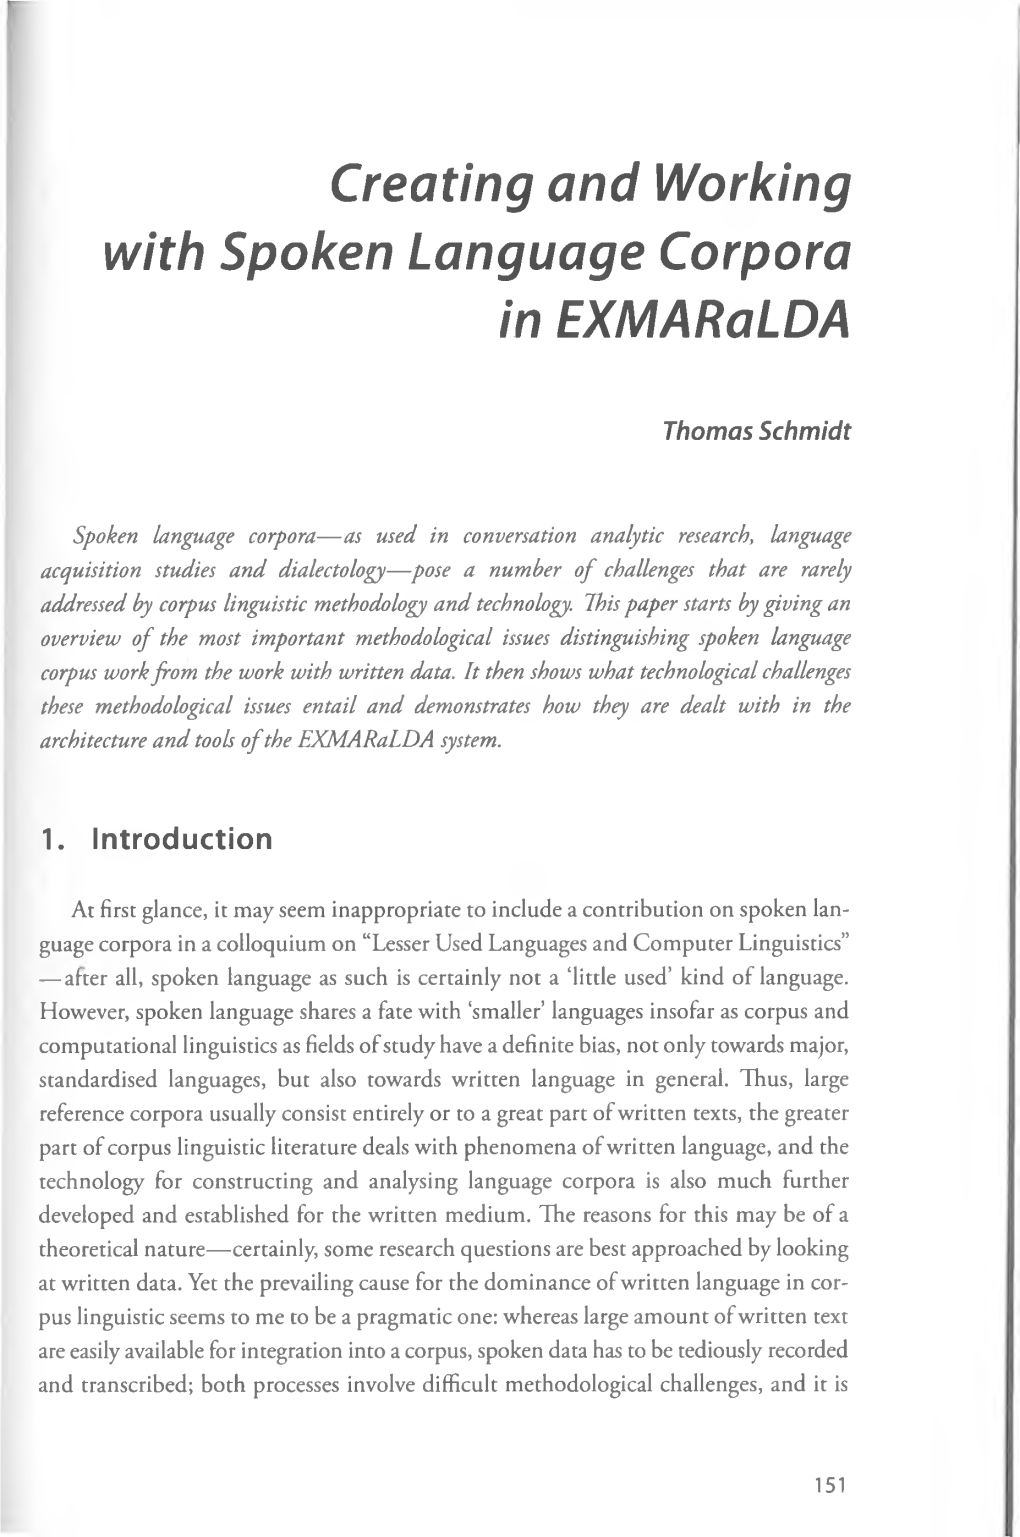 Creating and Working with Spoken Language Corpora in Exmaralda